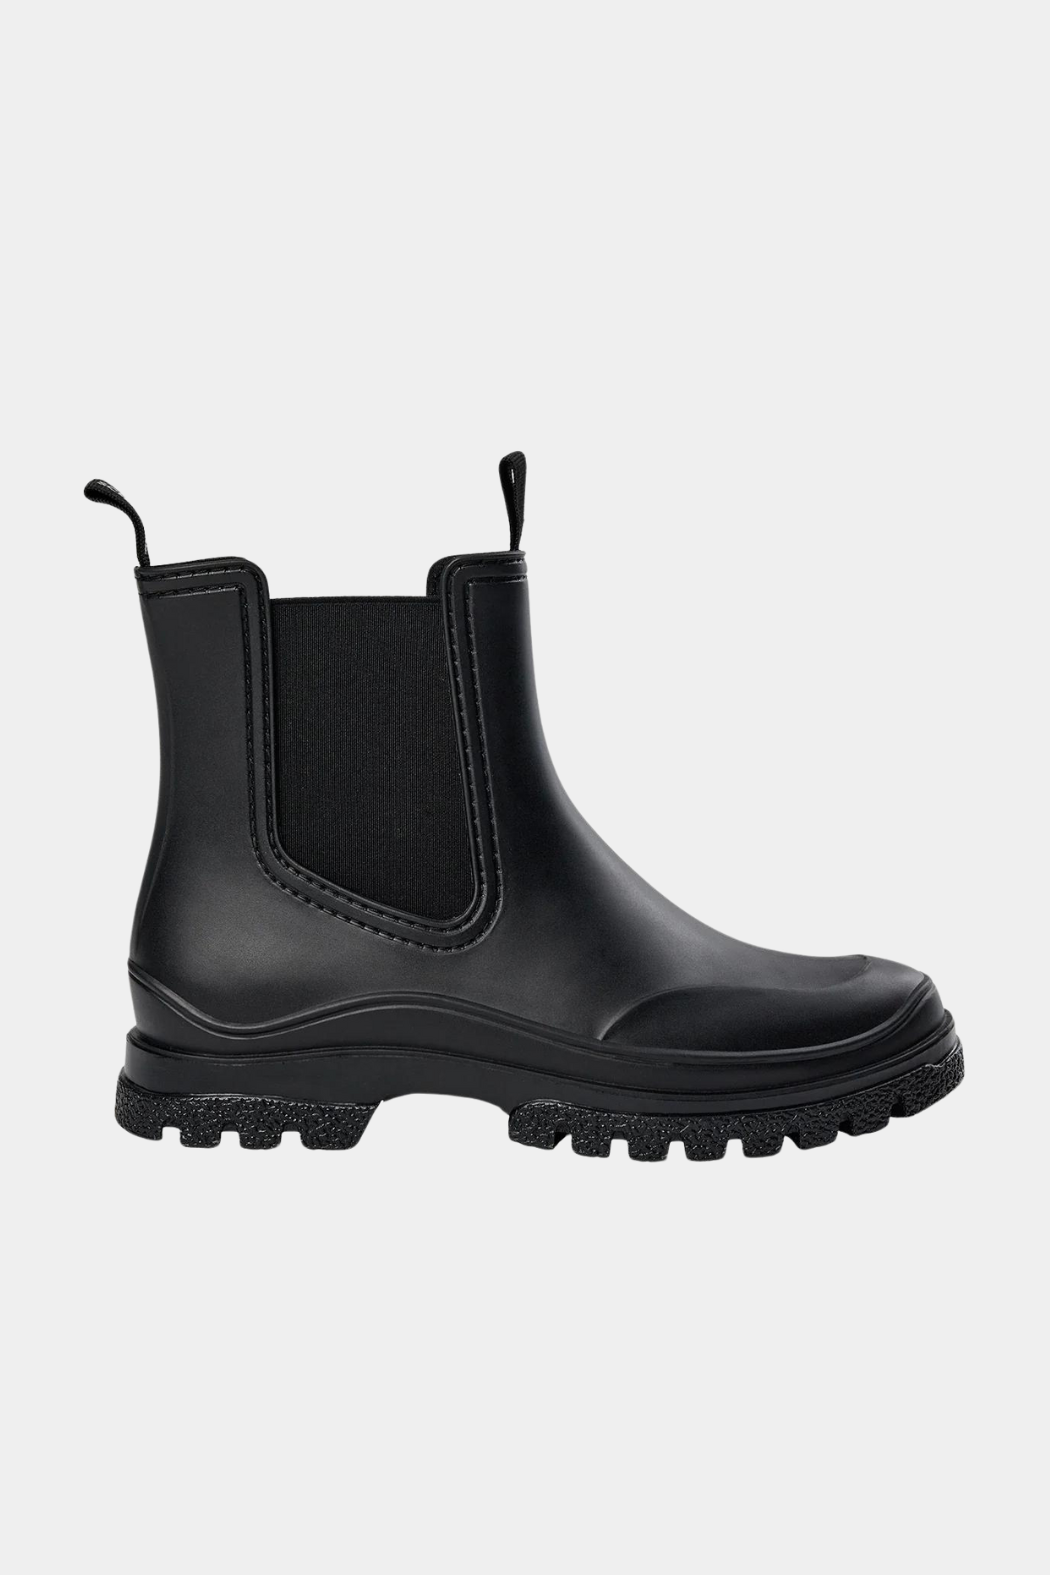 T427 rubber boots, black